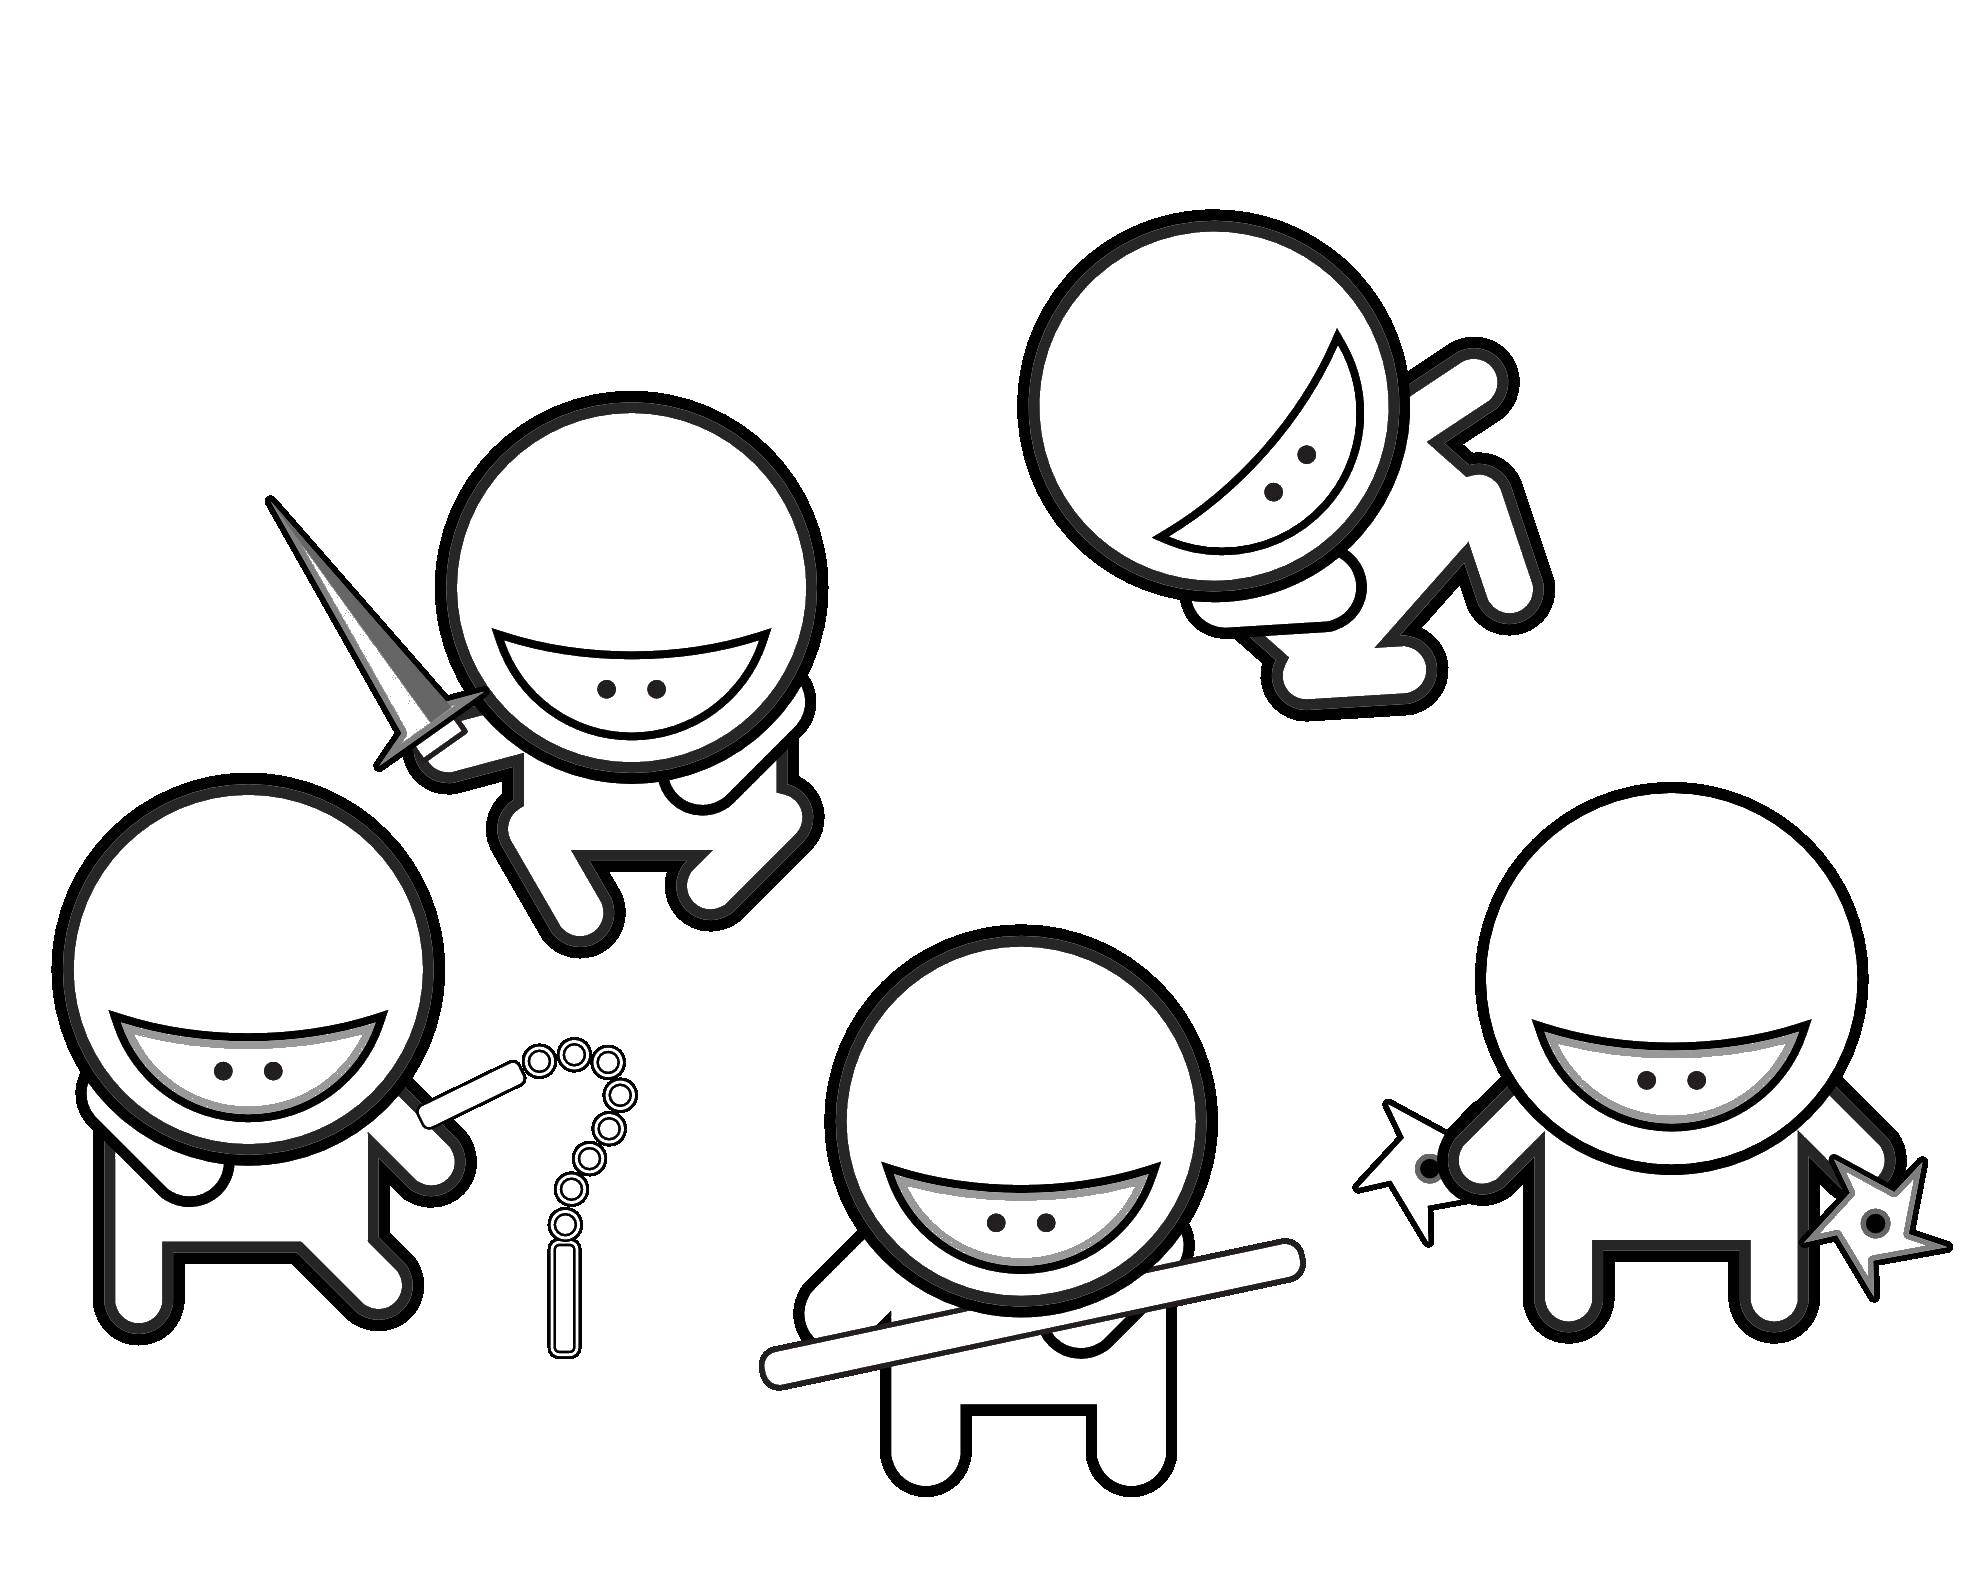 Coloring Five ninja. Category ninja . Tags:  ninja weapons.